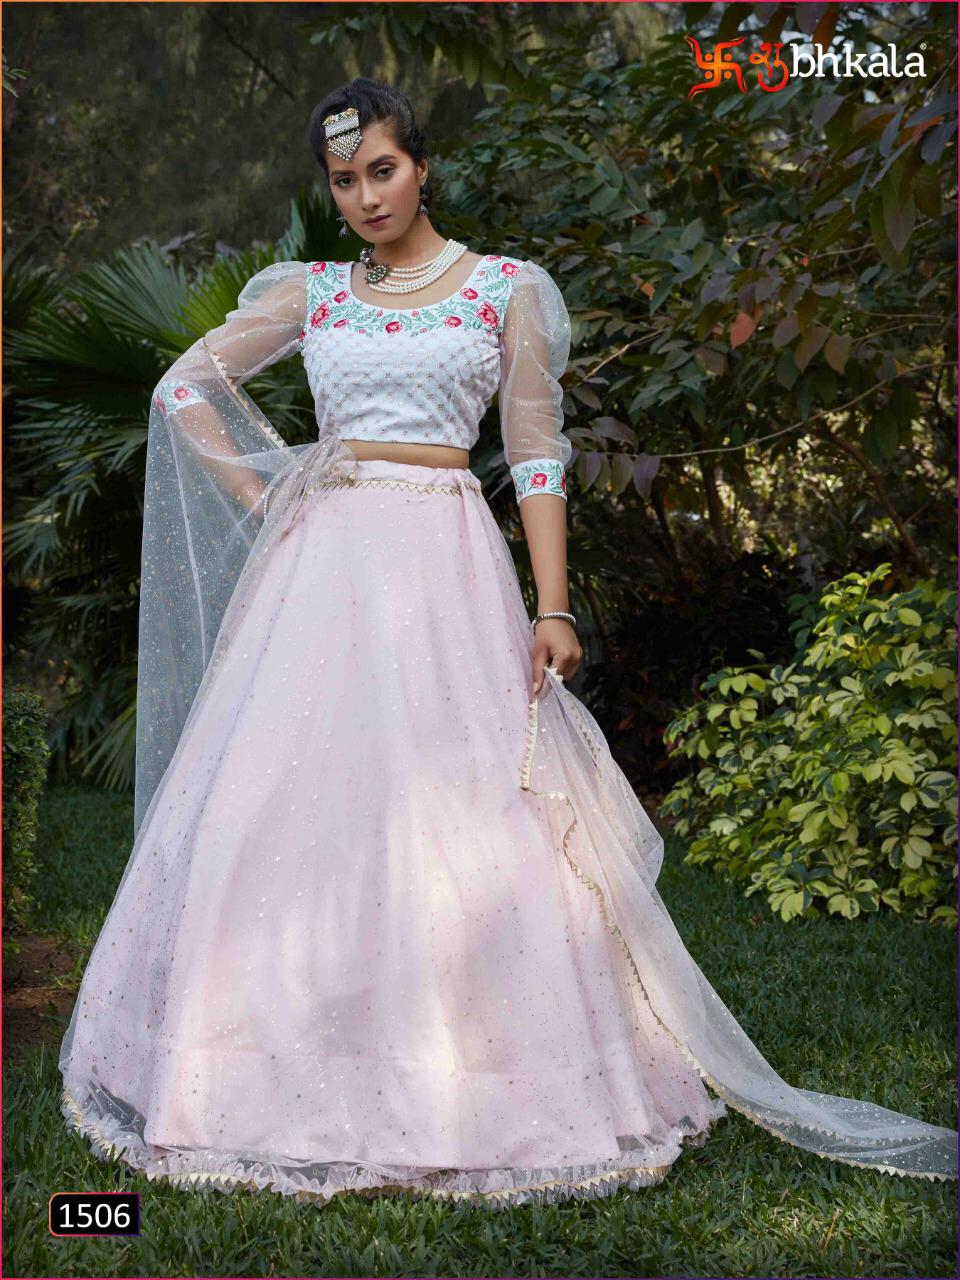 Shubhkala Presents Bridesmaid Vol-9 Fancy New Designer Lehenga Choli Cataloge Collection